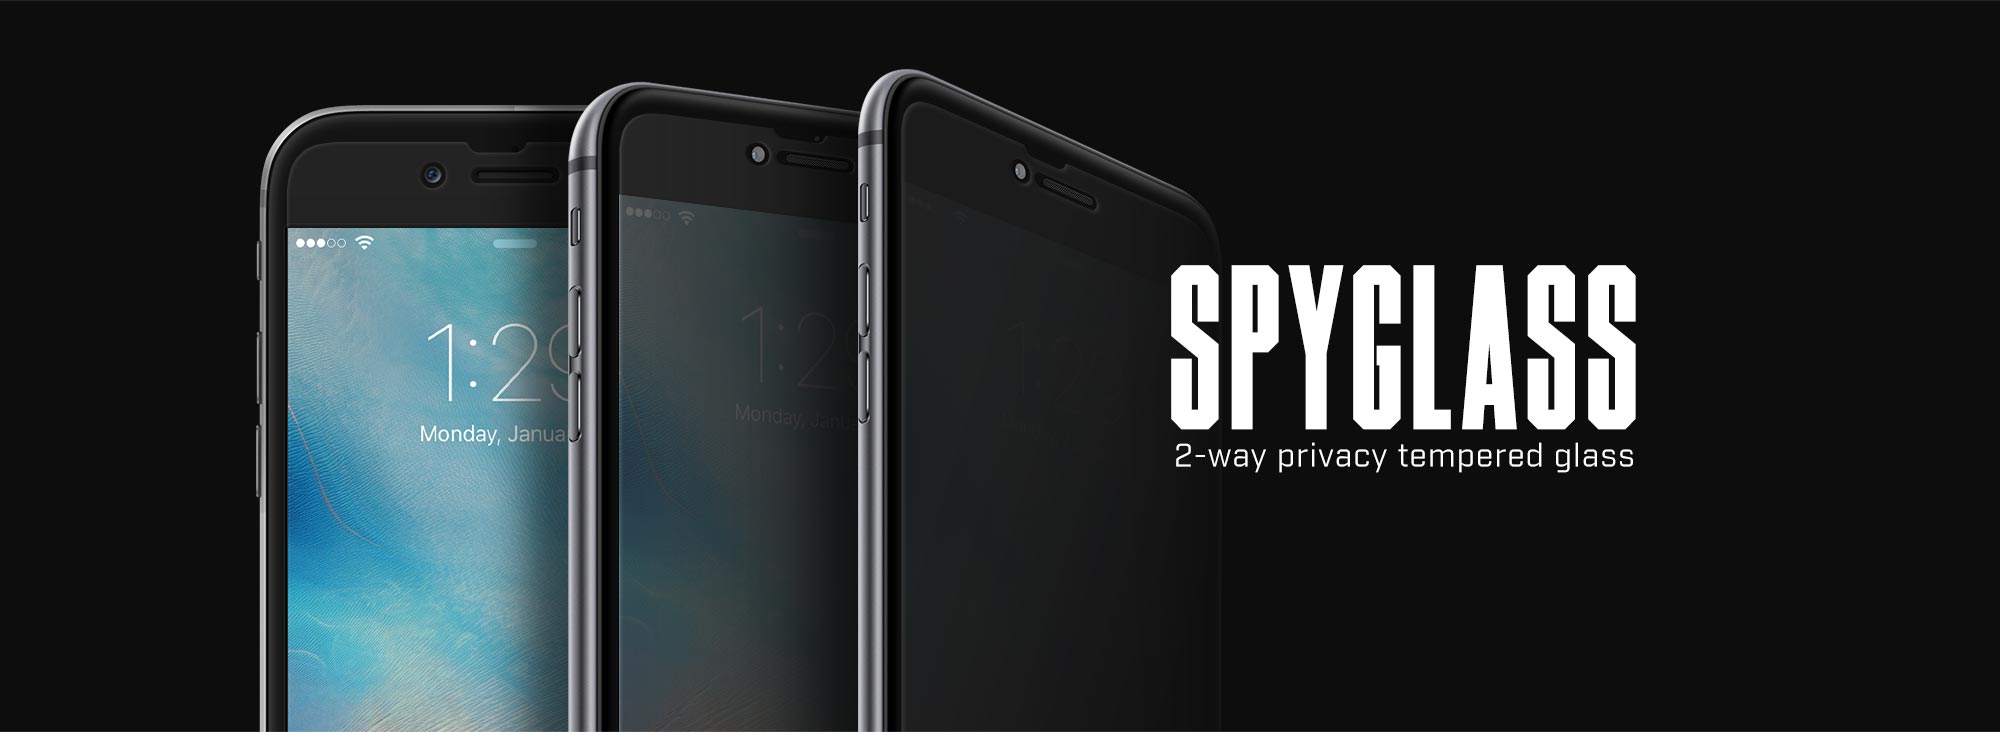 Spyglass privacy phone screen protectors